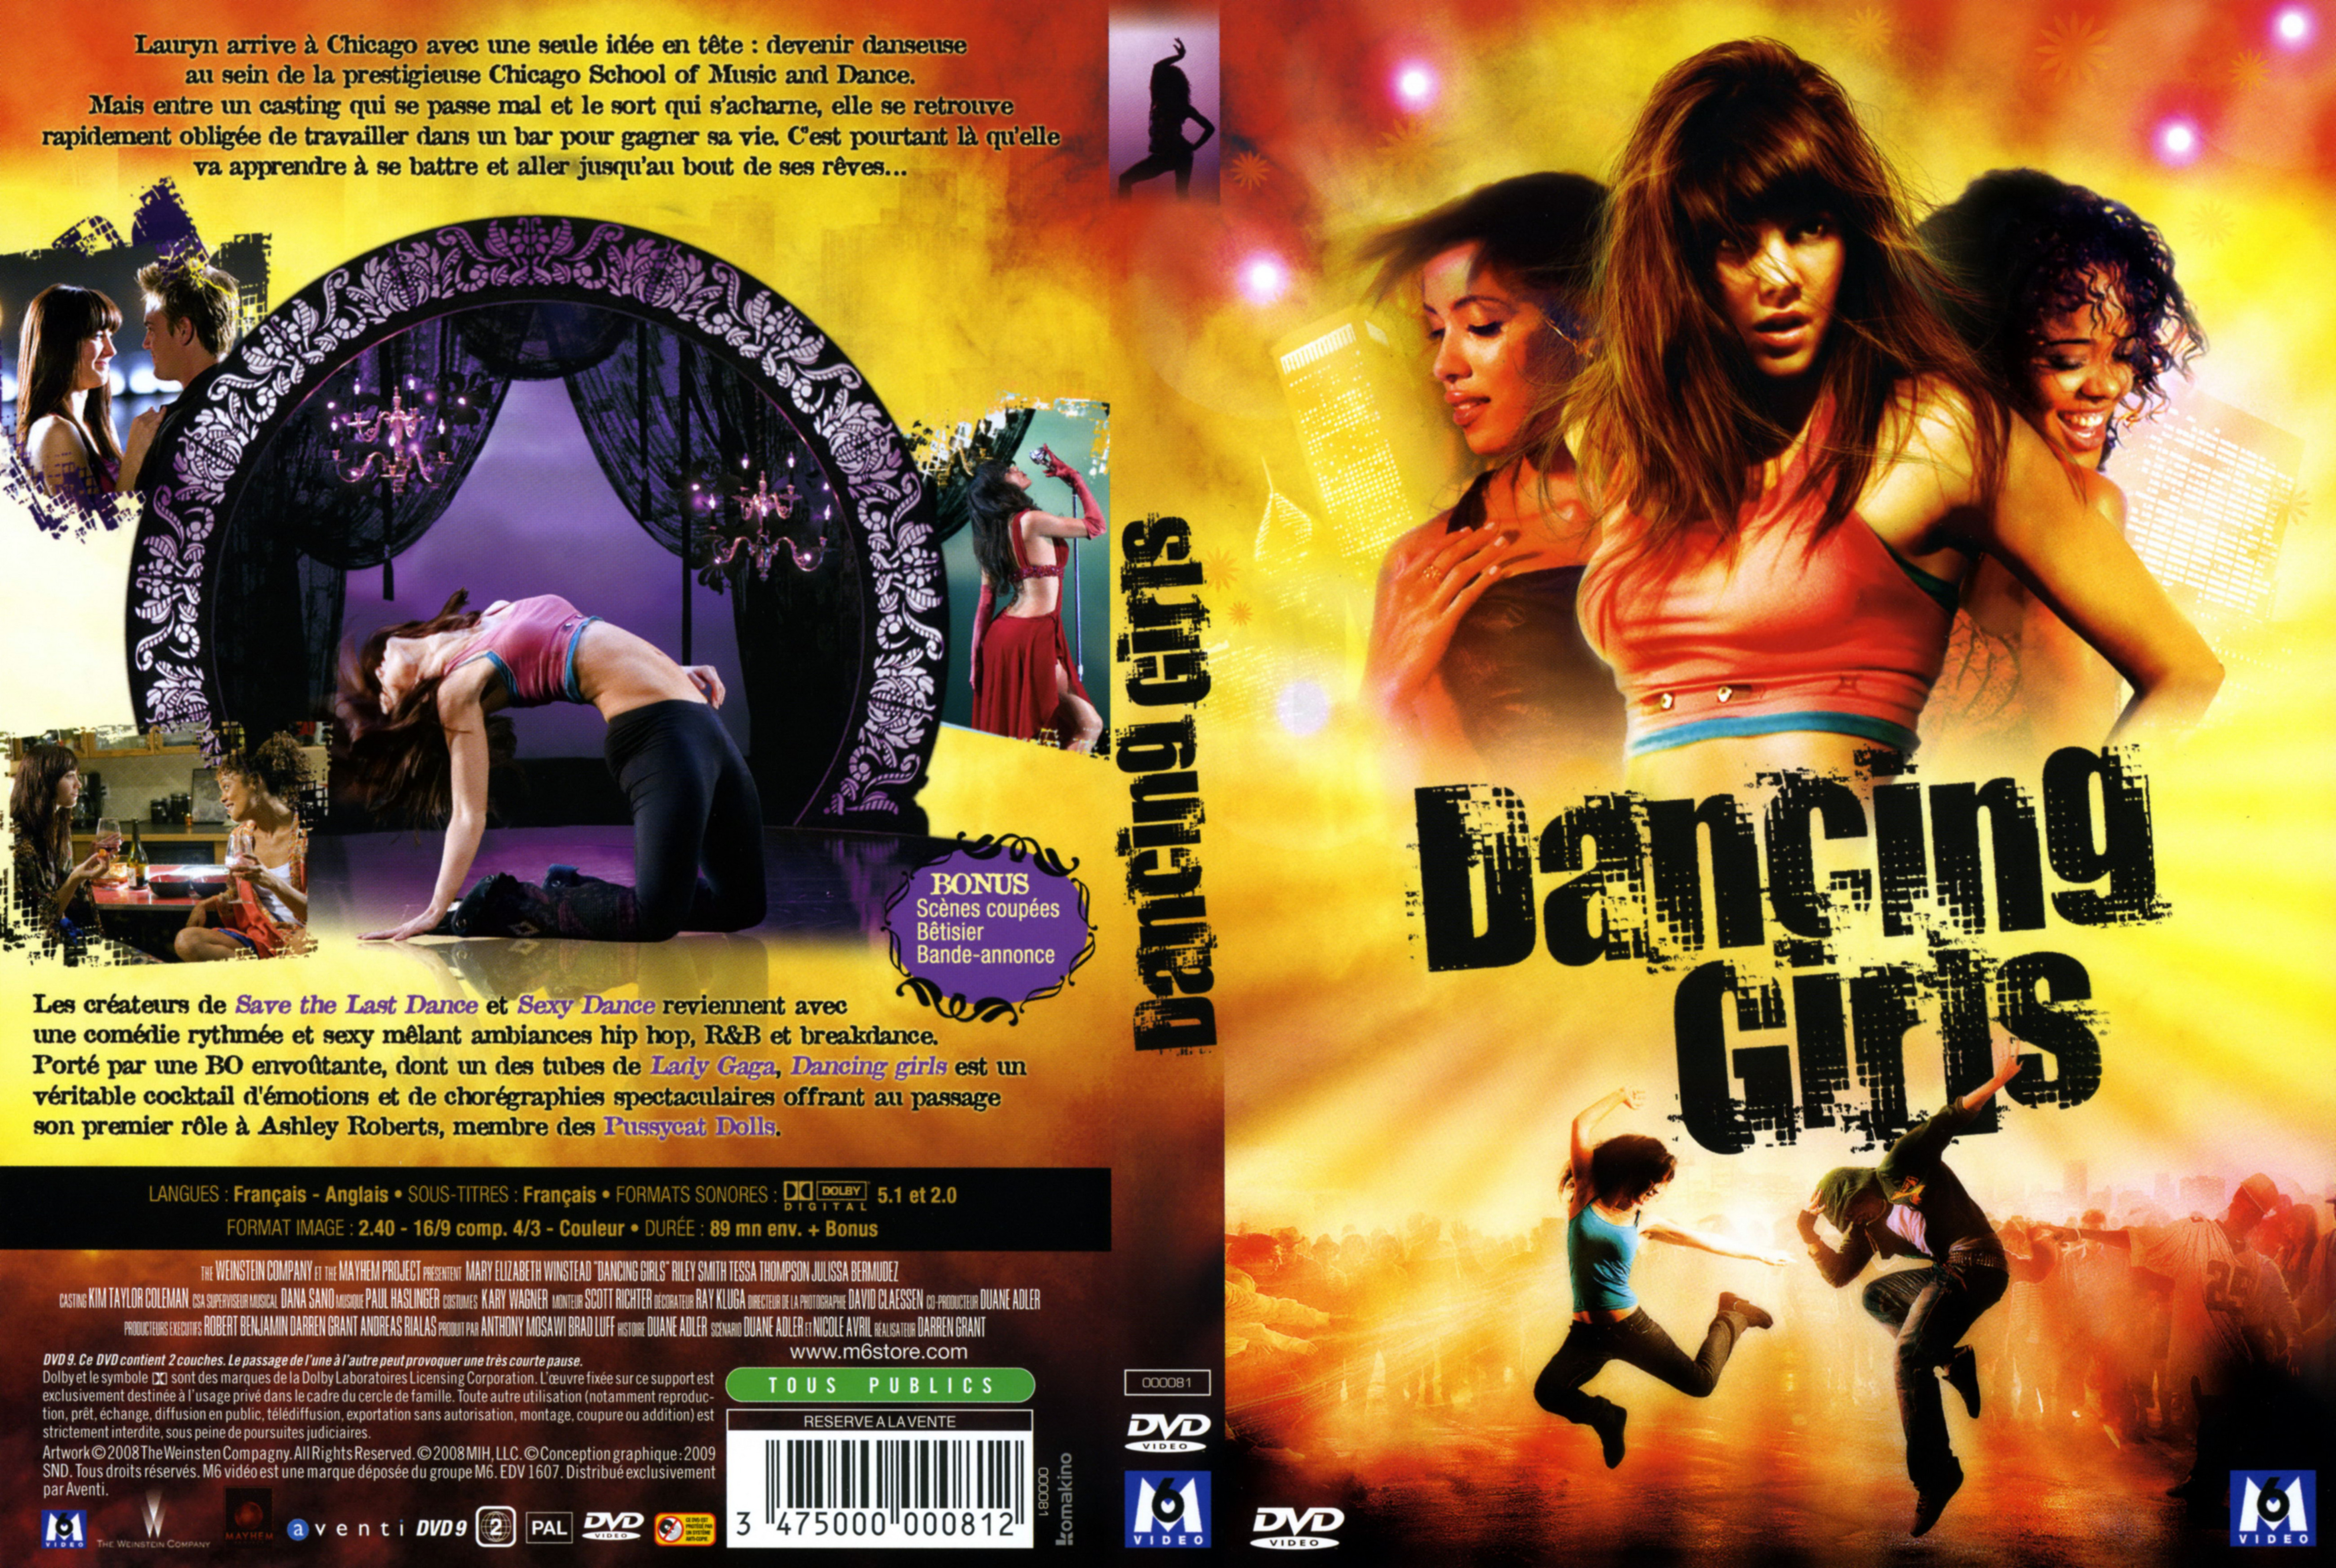 Jaquette DVD Dancing girls v2